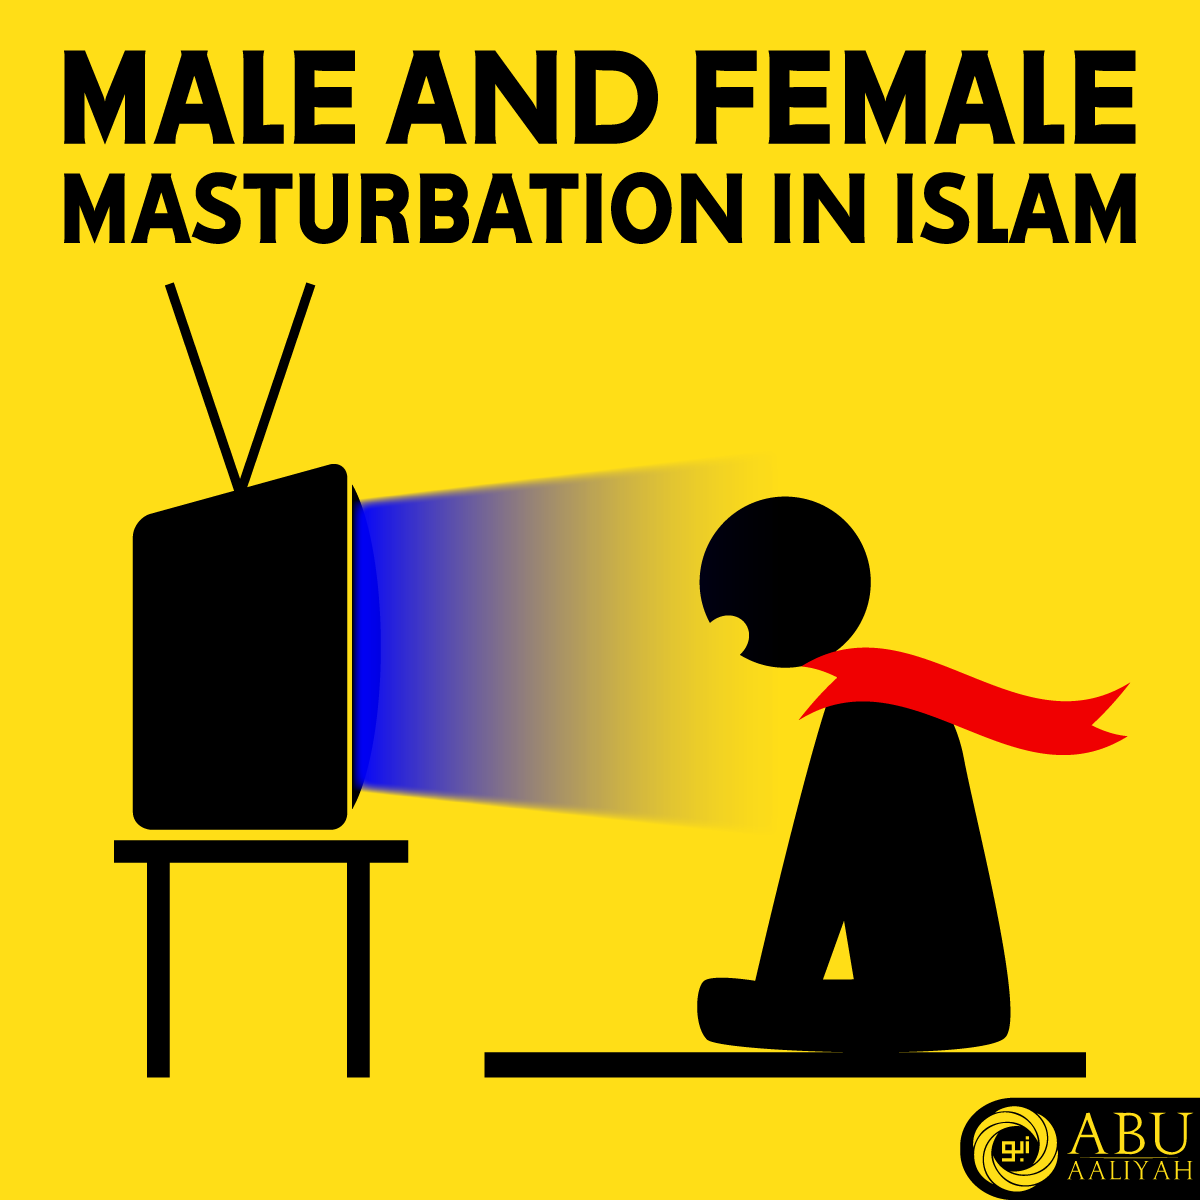 Masturbation and islamic religion